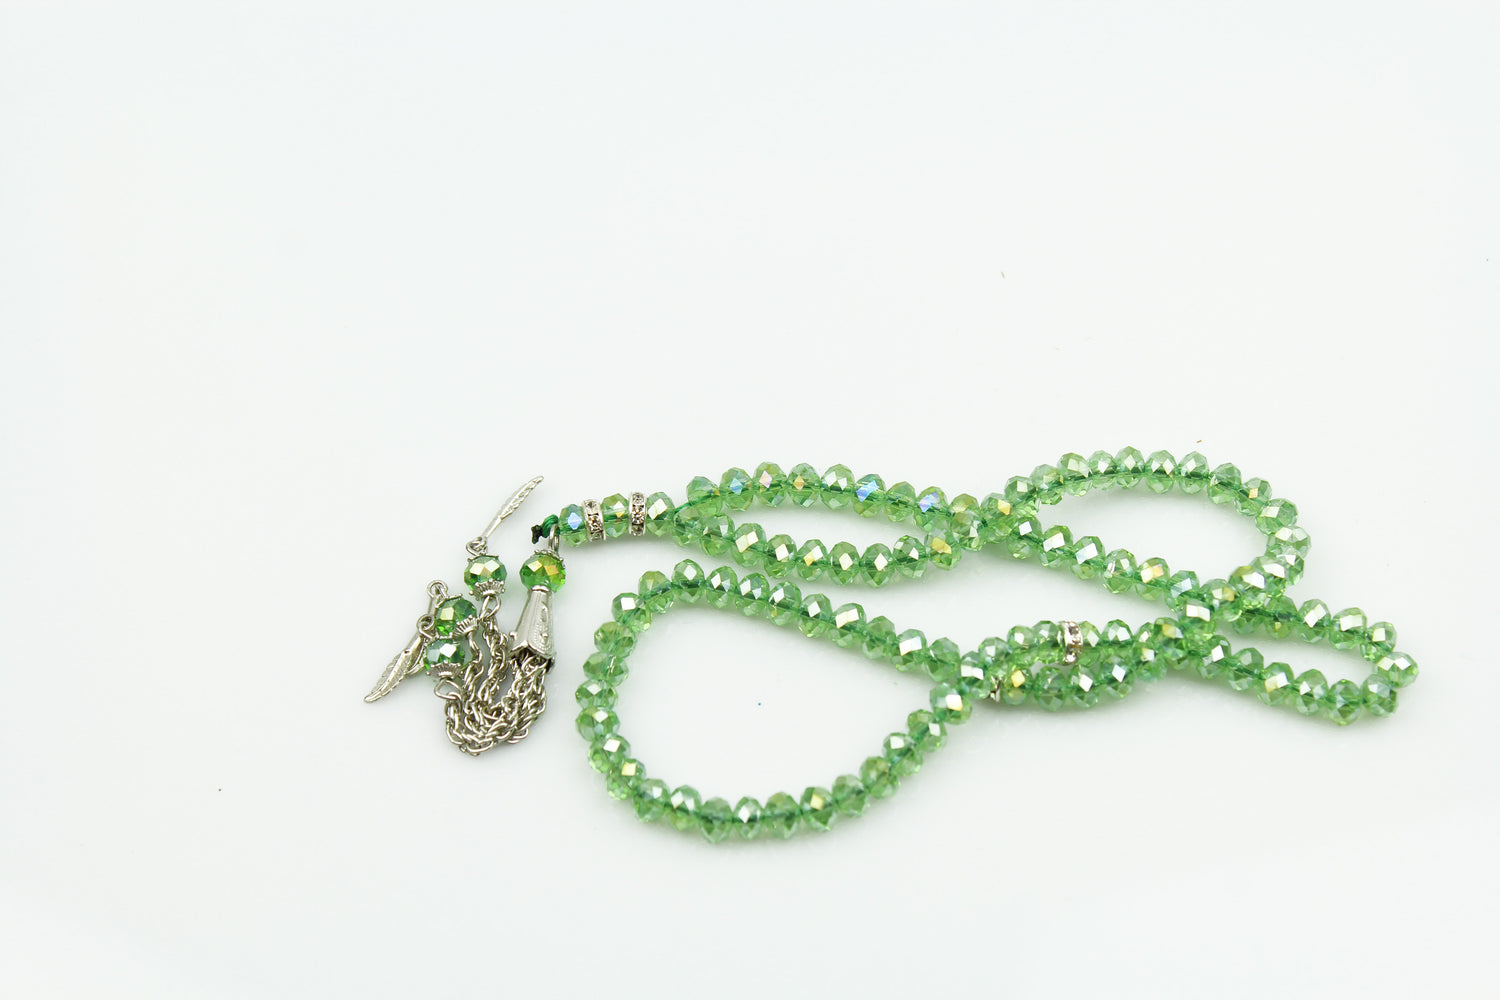 light green crystal tasbeeh with 99 beads